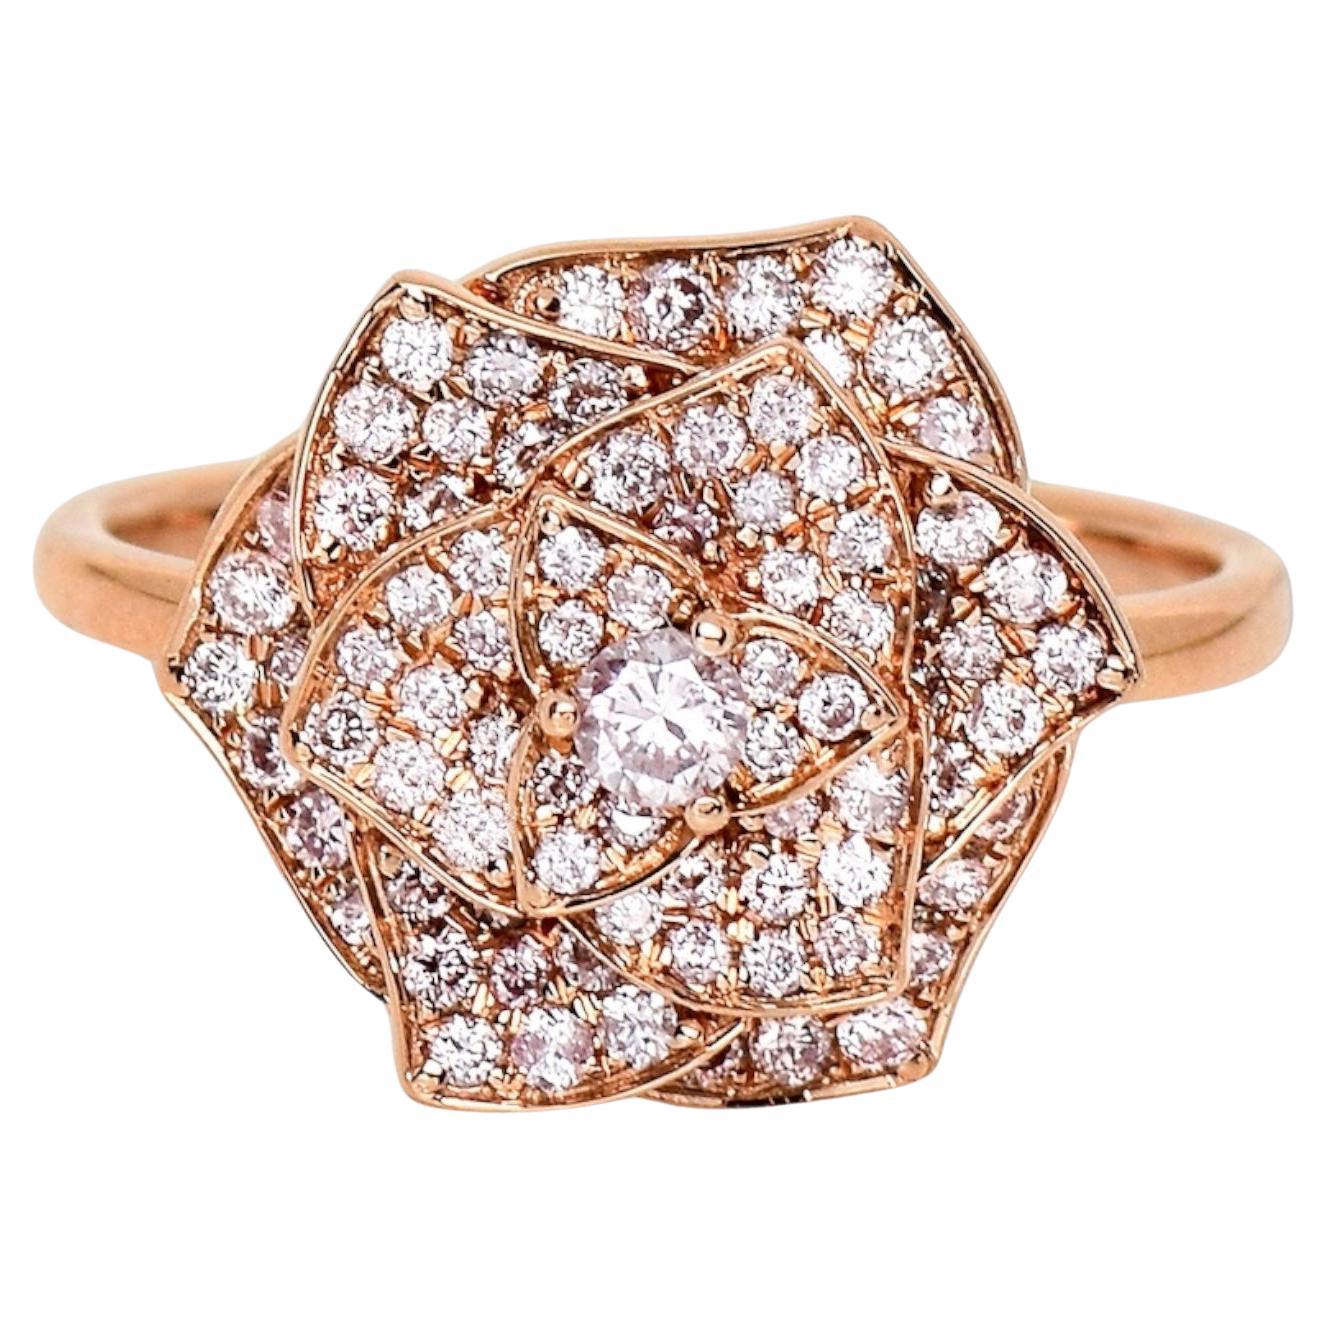 IGI 14K 0.60 ct Natural Pink Diamonds Rose Design Antique Art Deco Ring For Sale